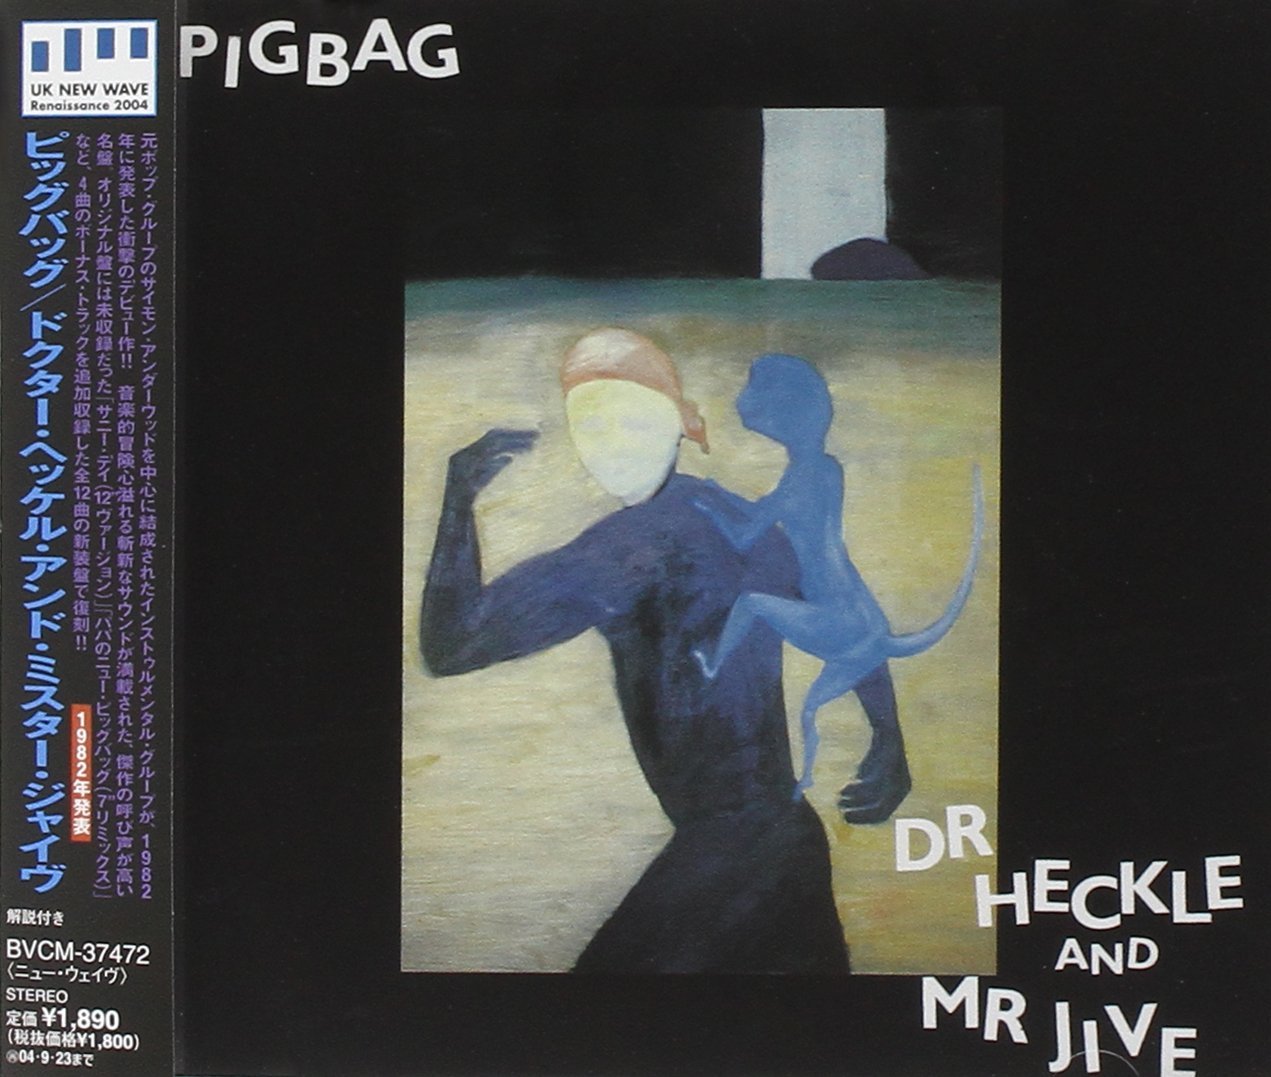 DR HECKLE AND MR JIVE / PIGBAGのジャケット